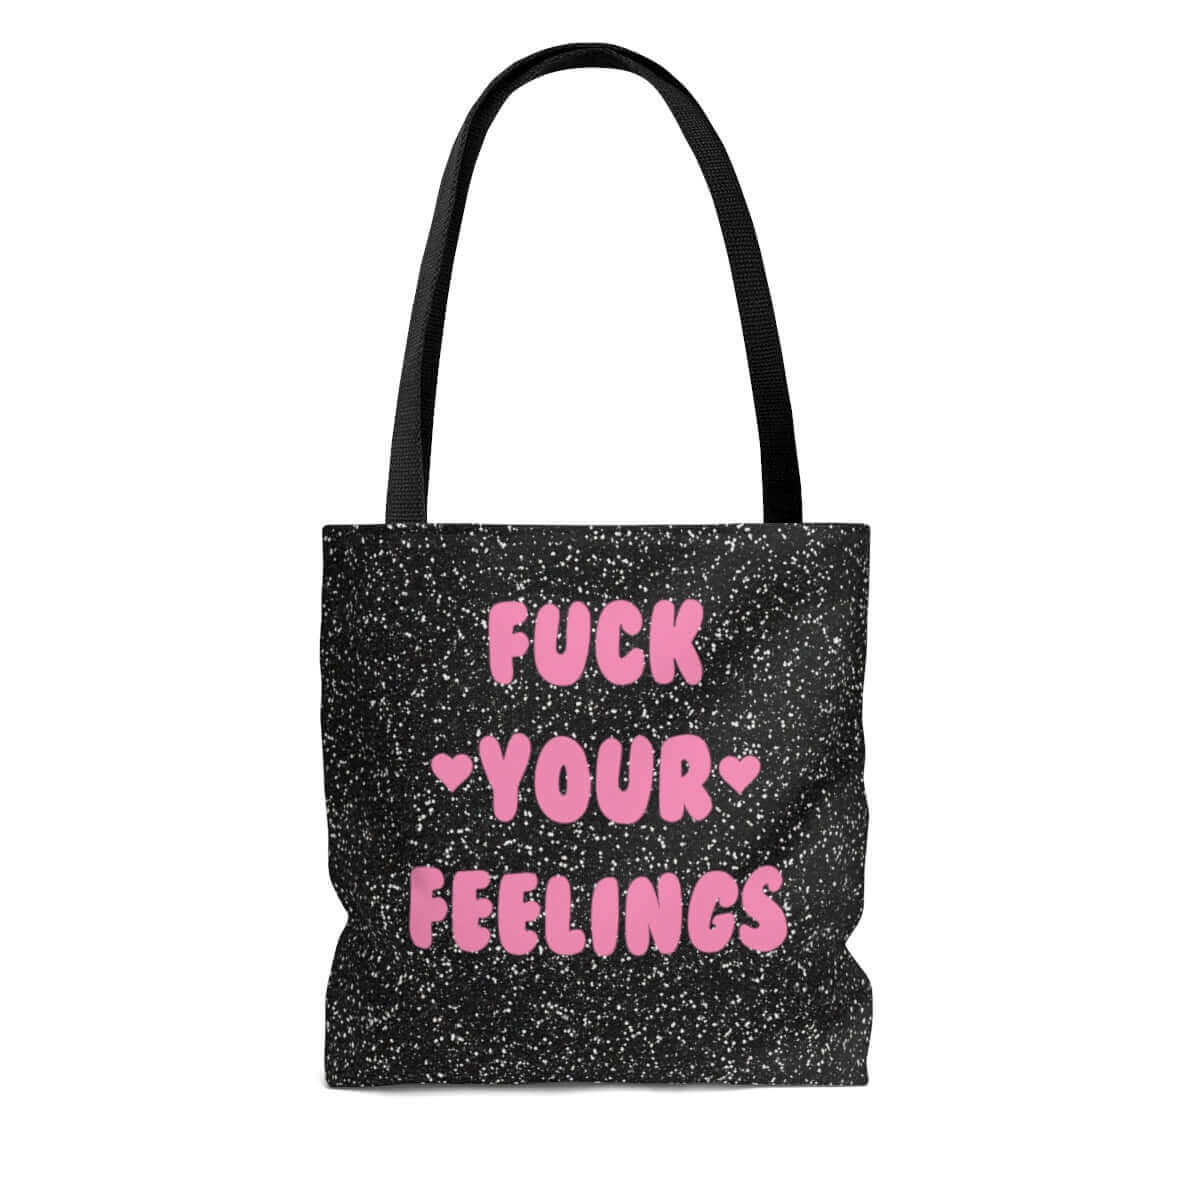 Fuck your feelings pink heart printed tote bag